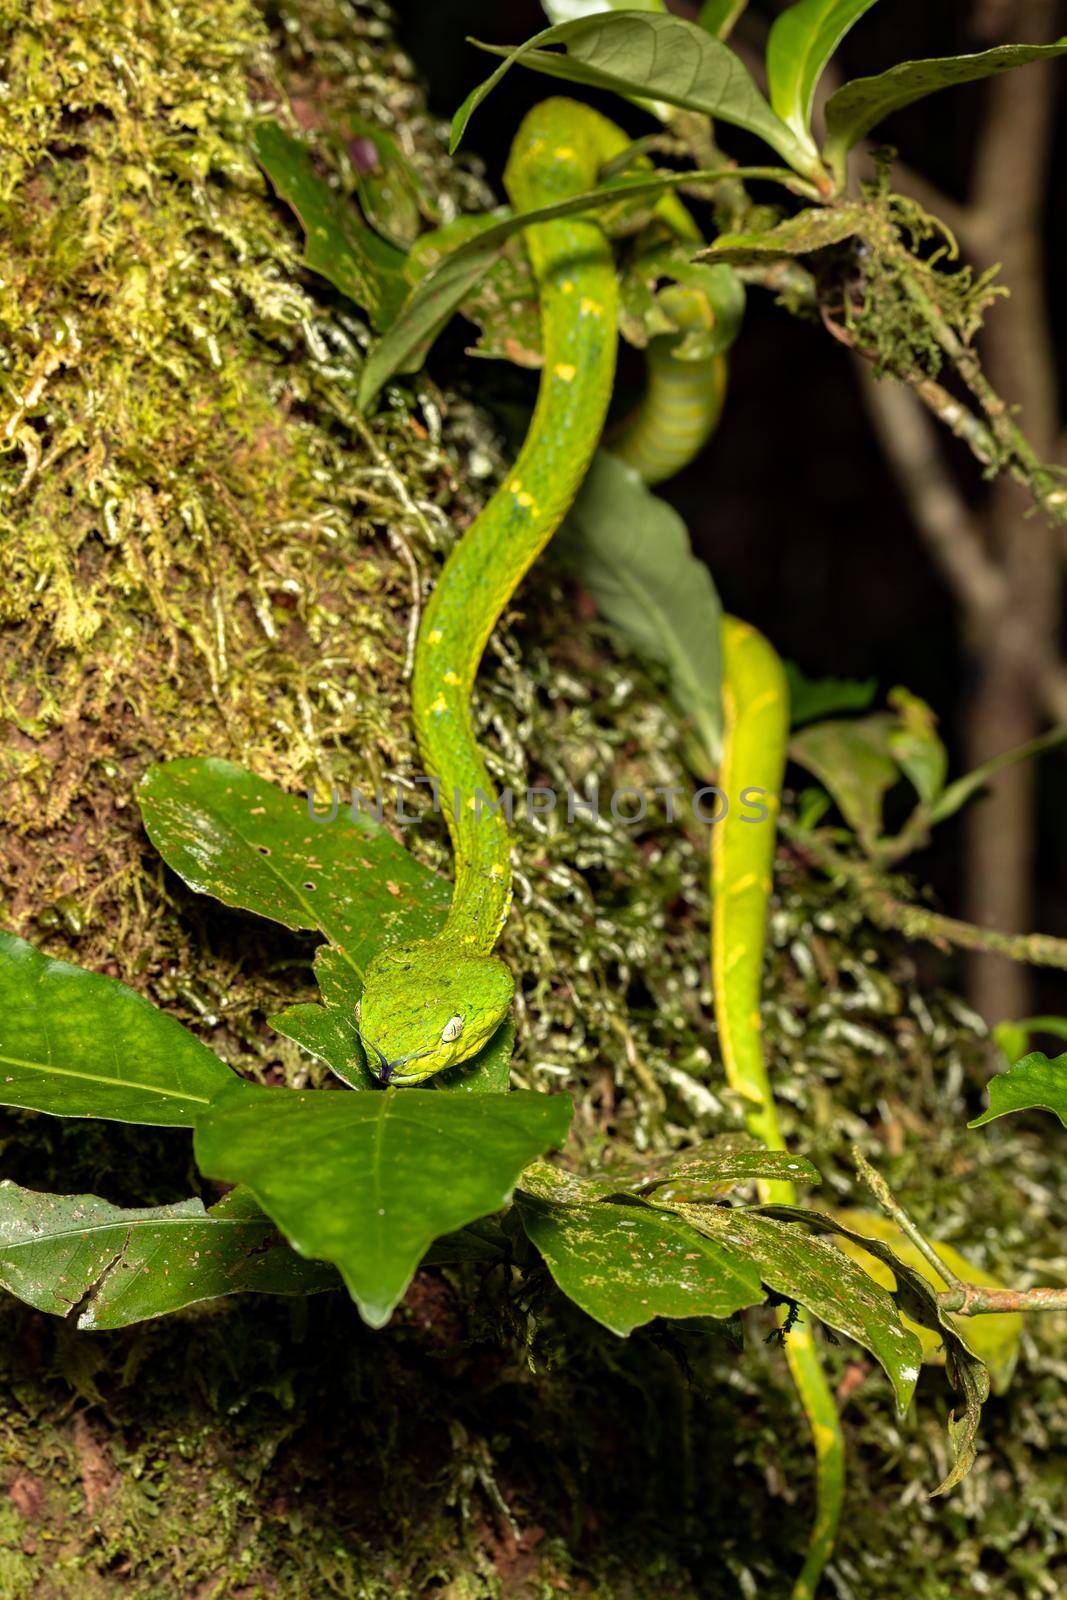 Bothriechis lateralis, Green green snake, Santa Elena, Costa Rica wildlife by artush